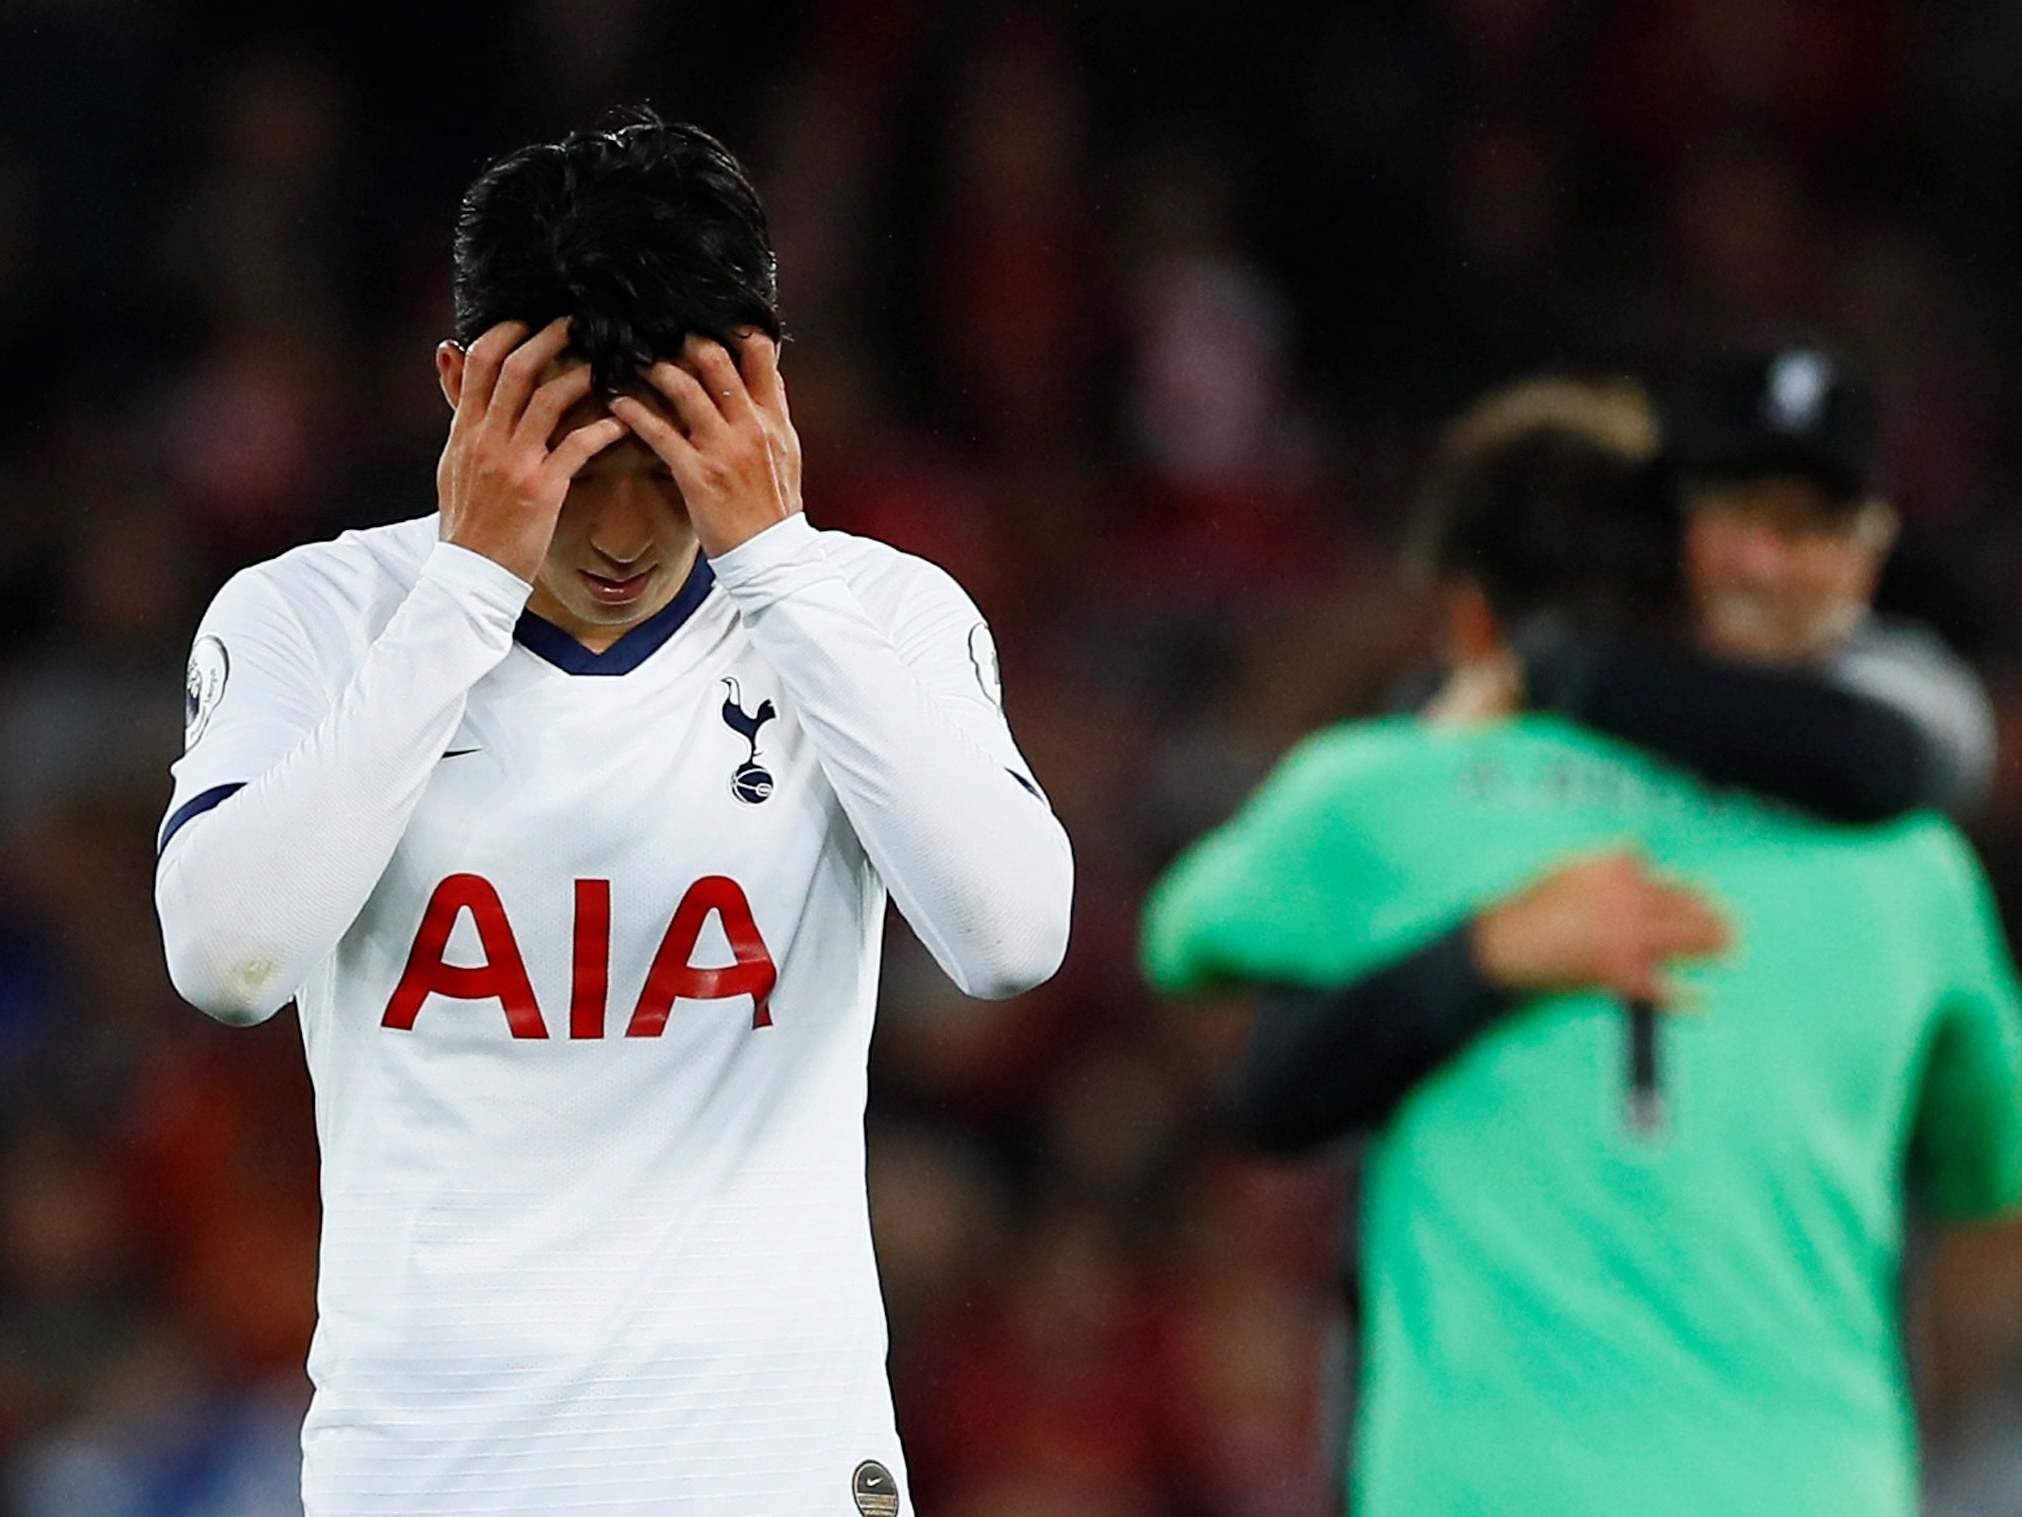 Tottenham Hotspur’s Son Heung-min looks dejected after the match